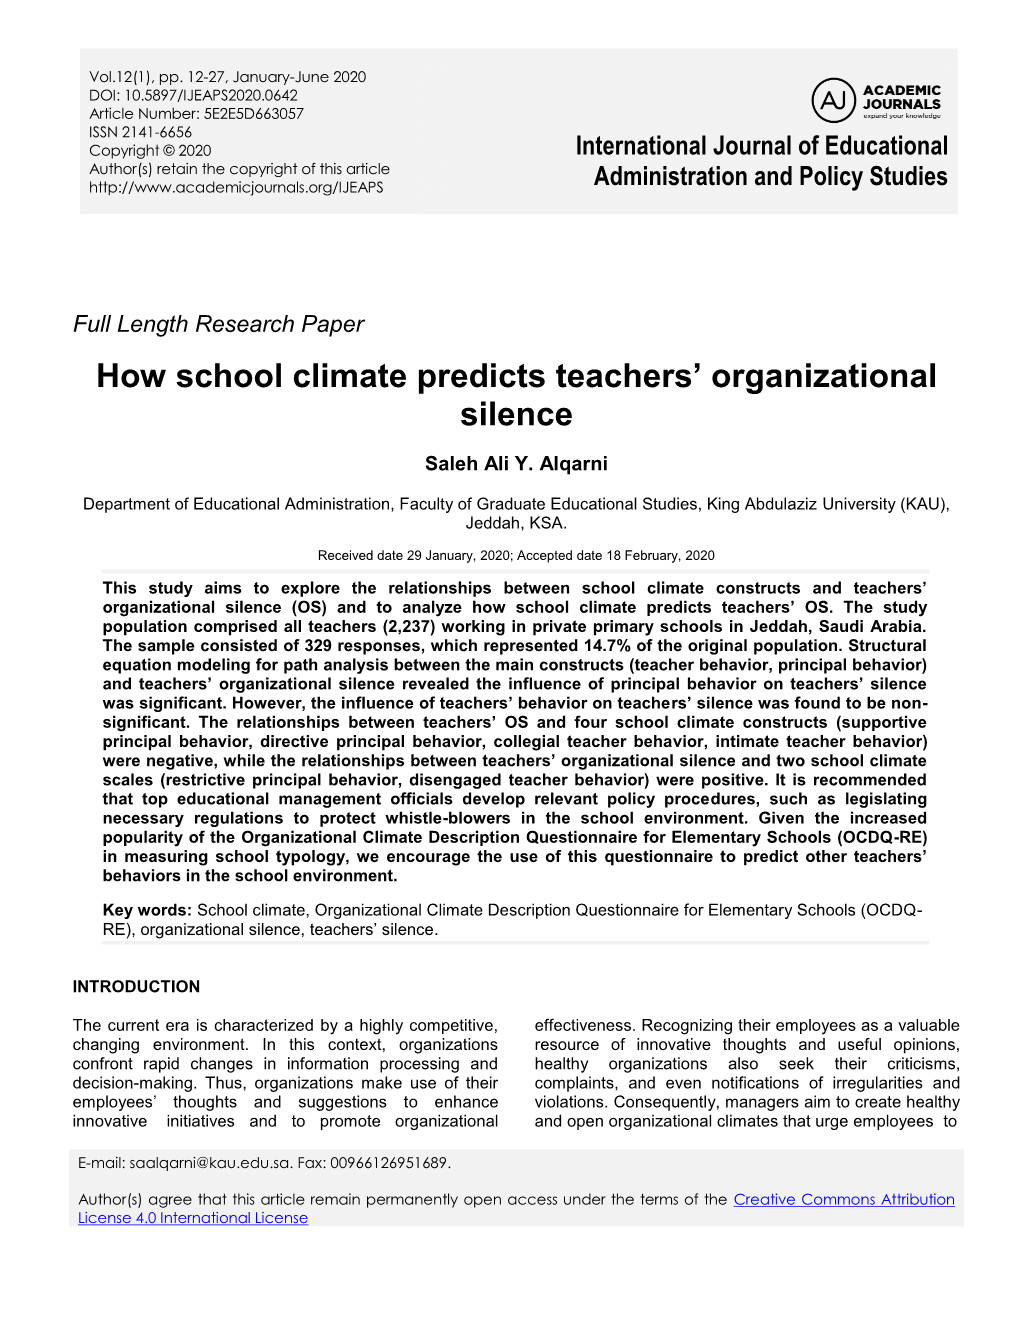 How School Climate Predicts Teachers' Organizational Silence